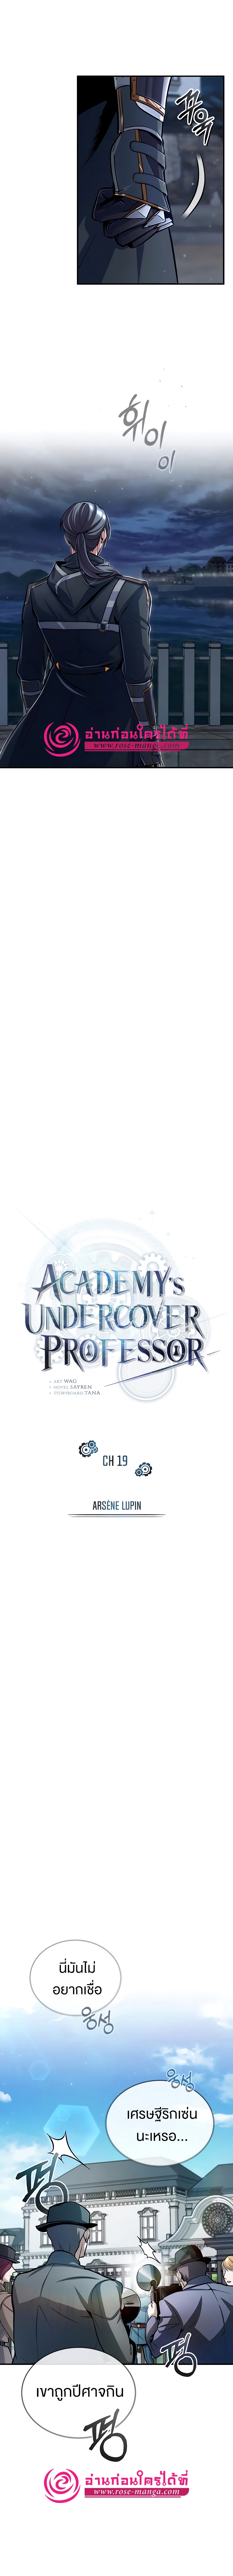 Academys-Undercover-Professor-20_06.jpg